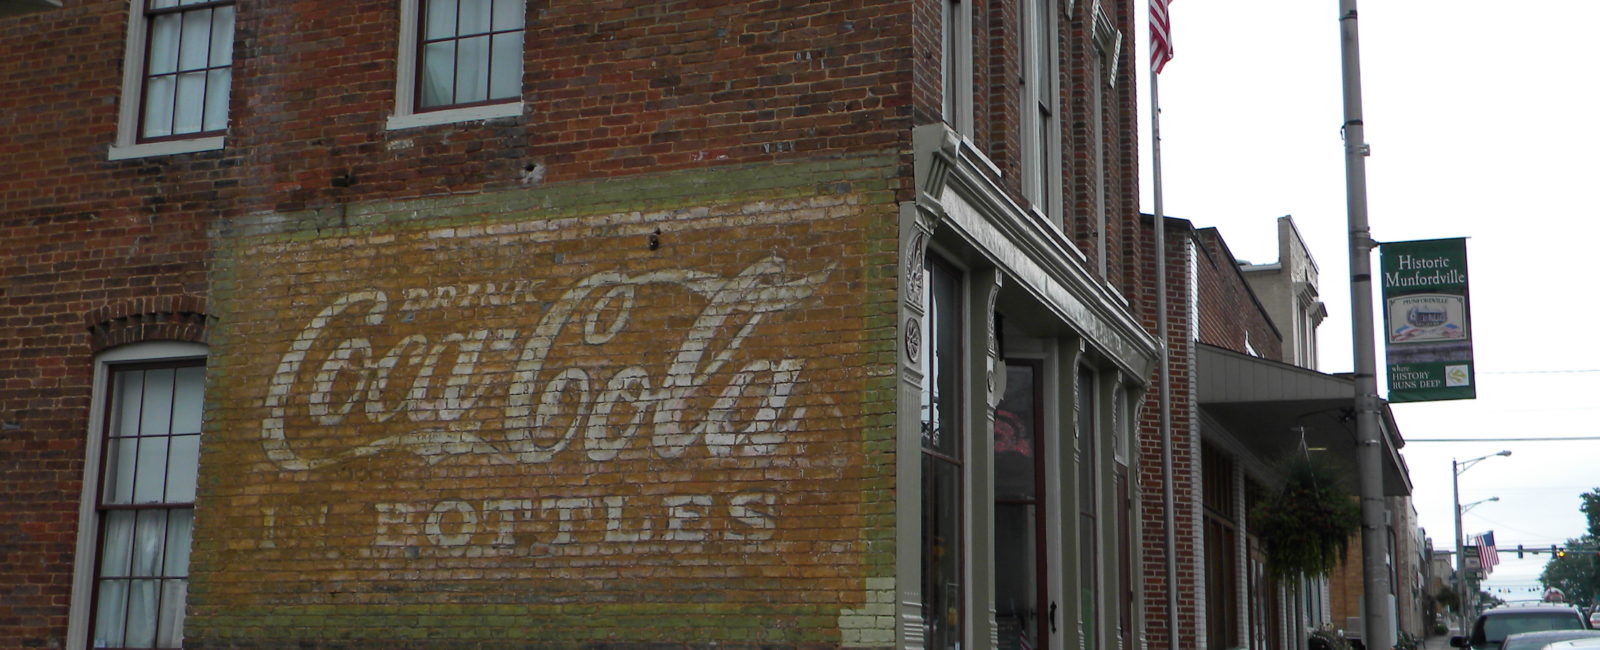 Coca Cola ghost sign, Munfordville